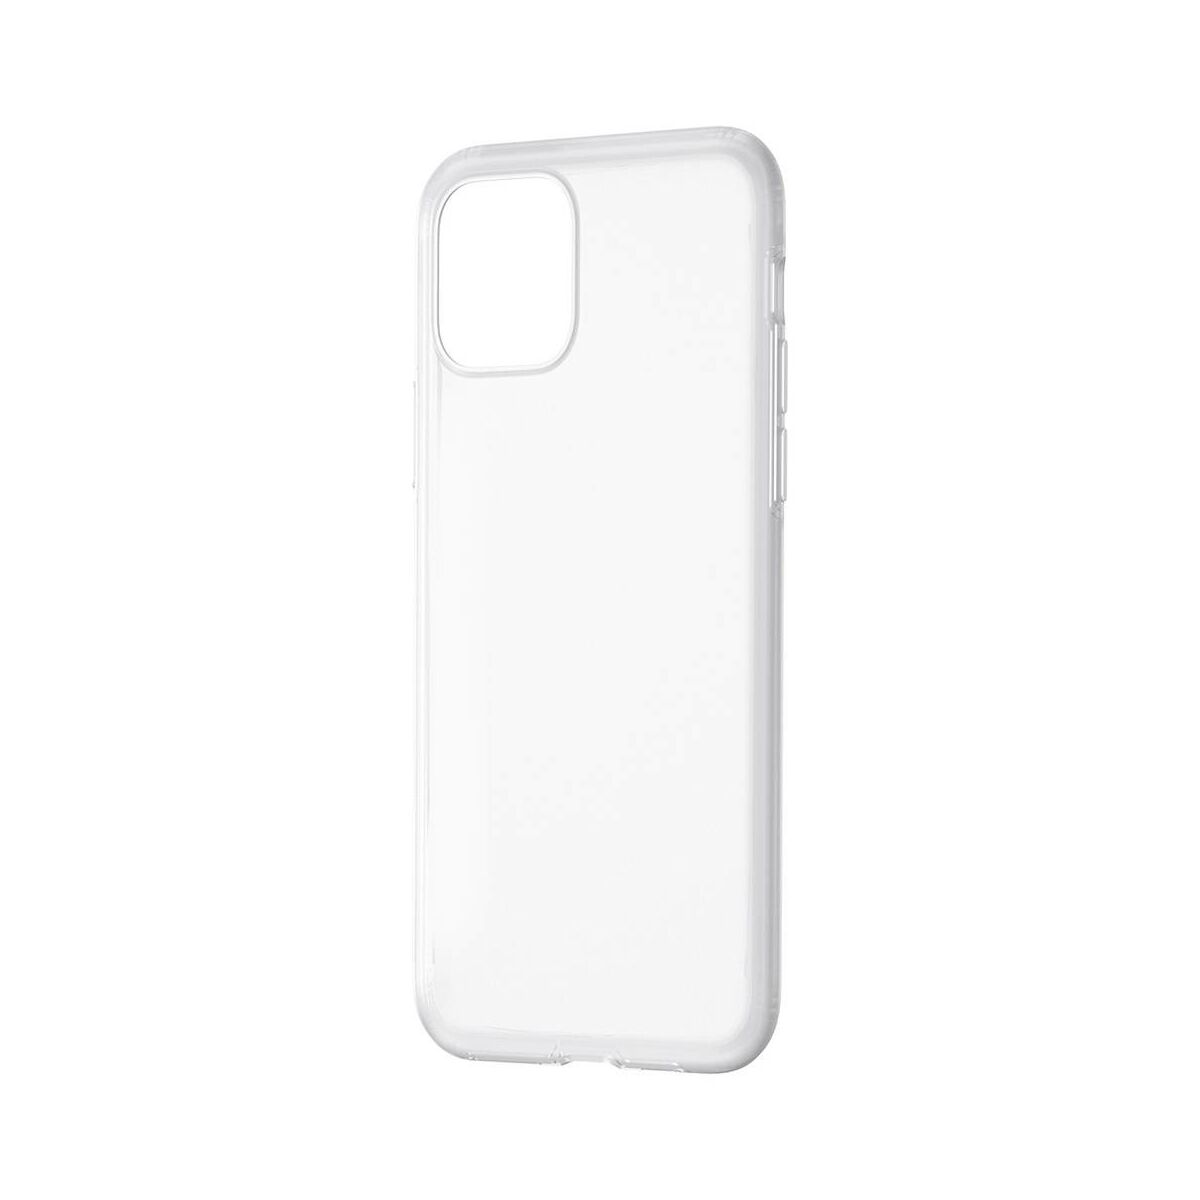 Kép 3/13 - Baseus iPhone 11 Pro Max tok, Jelly Liquid Silica Gel Protective, átlátszó fehér (WIAPIPH65S-GD02)